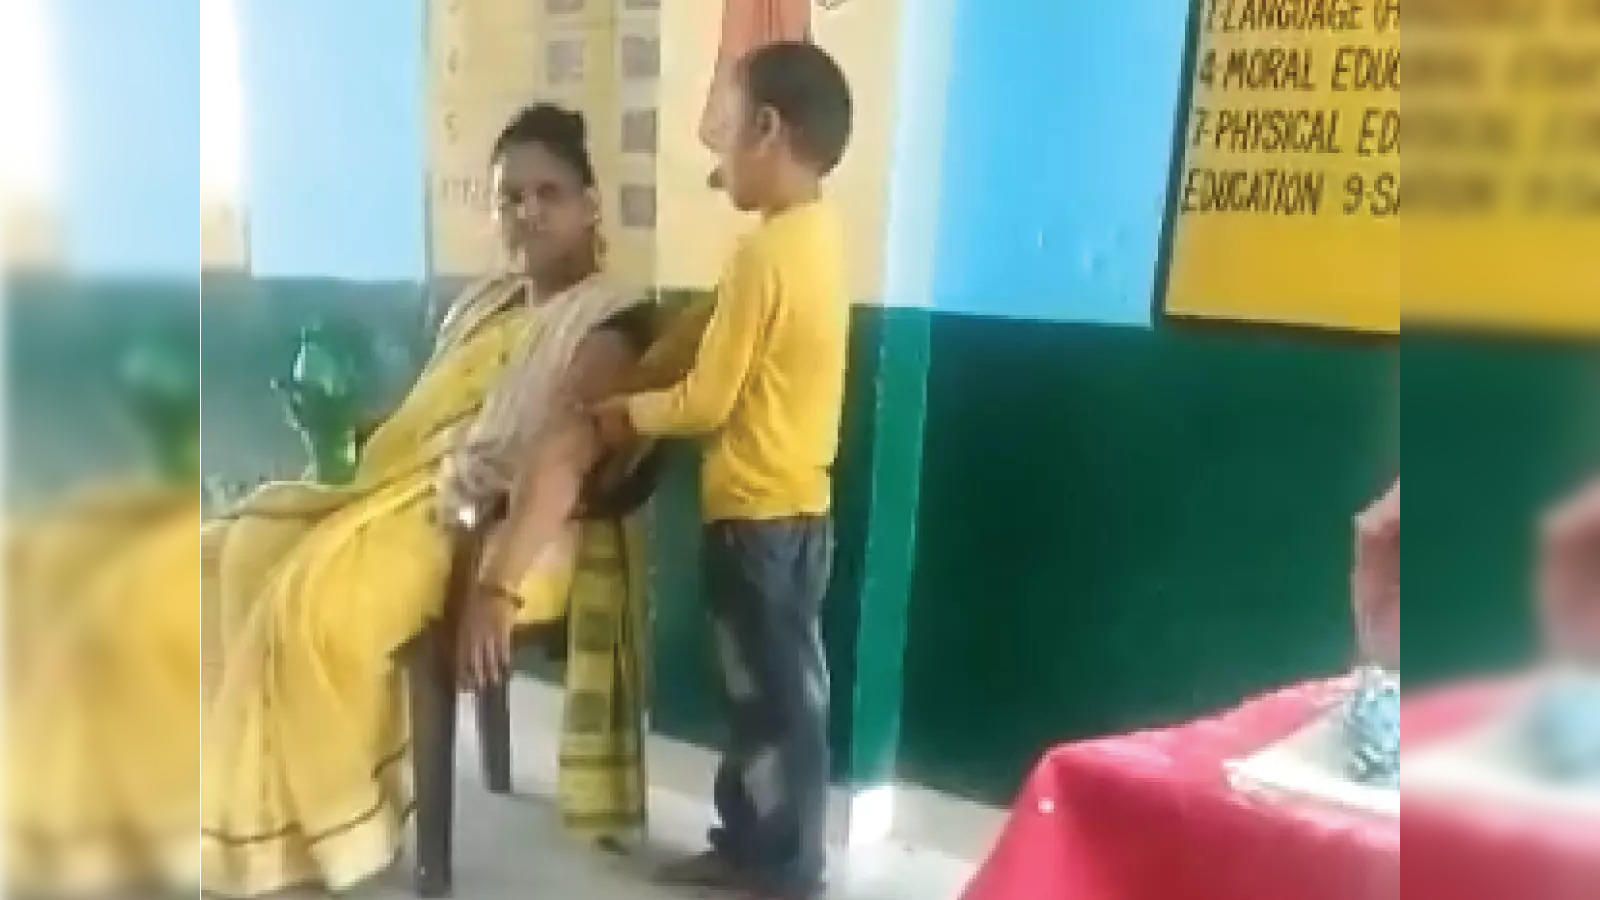 School Girl With School Boy Xxx - Teacher Massage: Teacher gets student to massage her arm, is suspended:  Viral video - The Economic Times